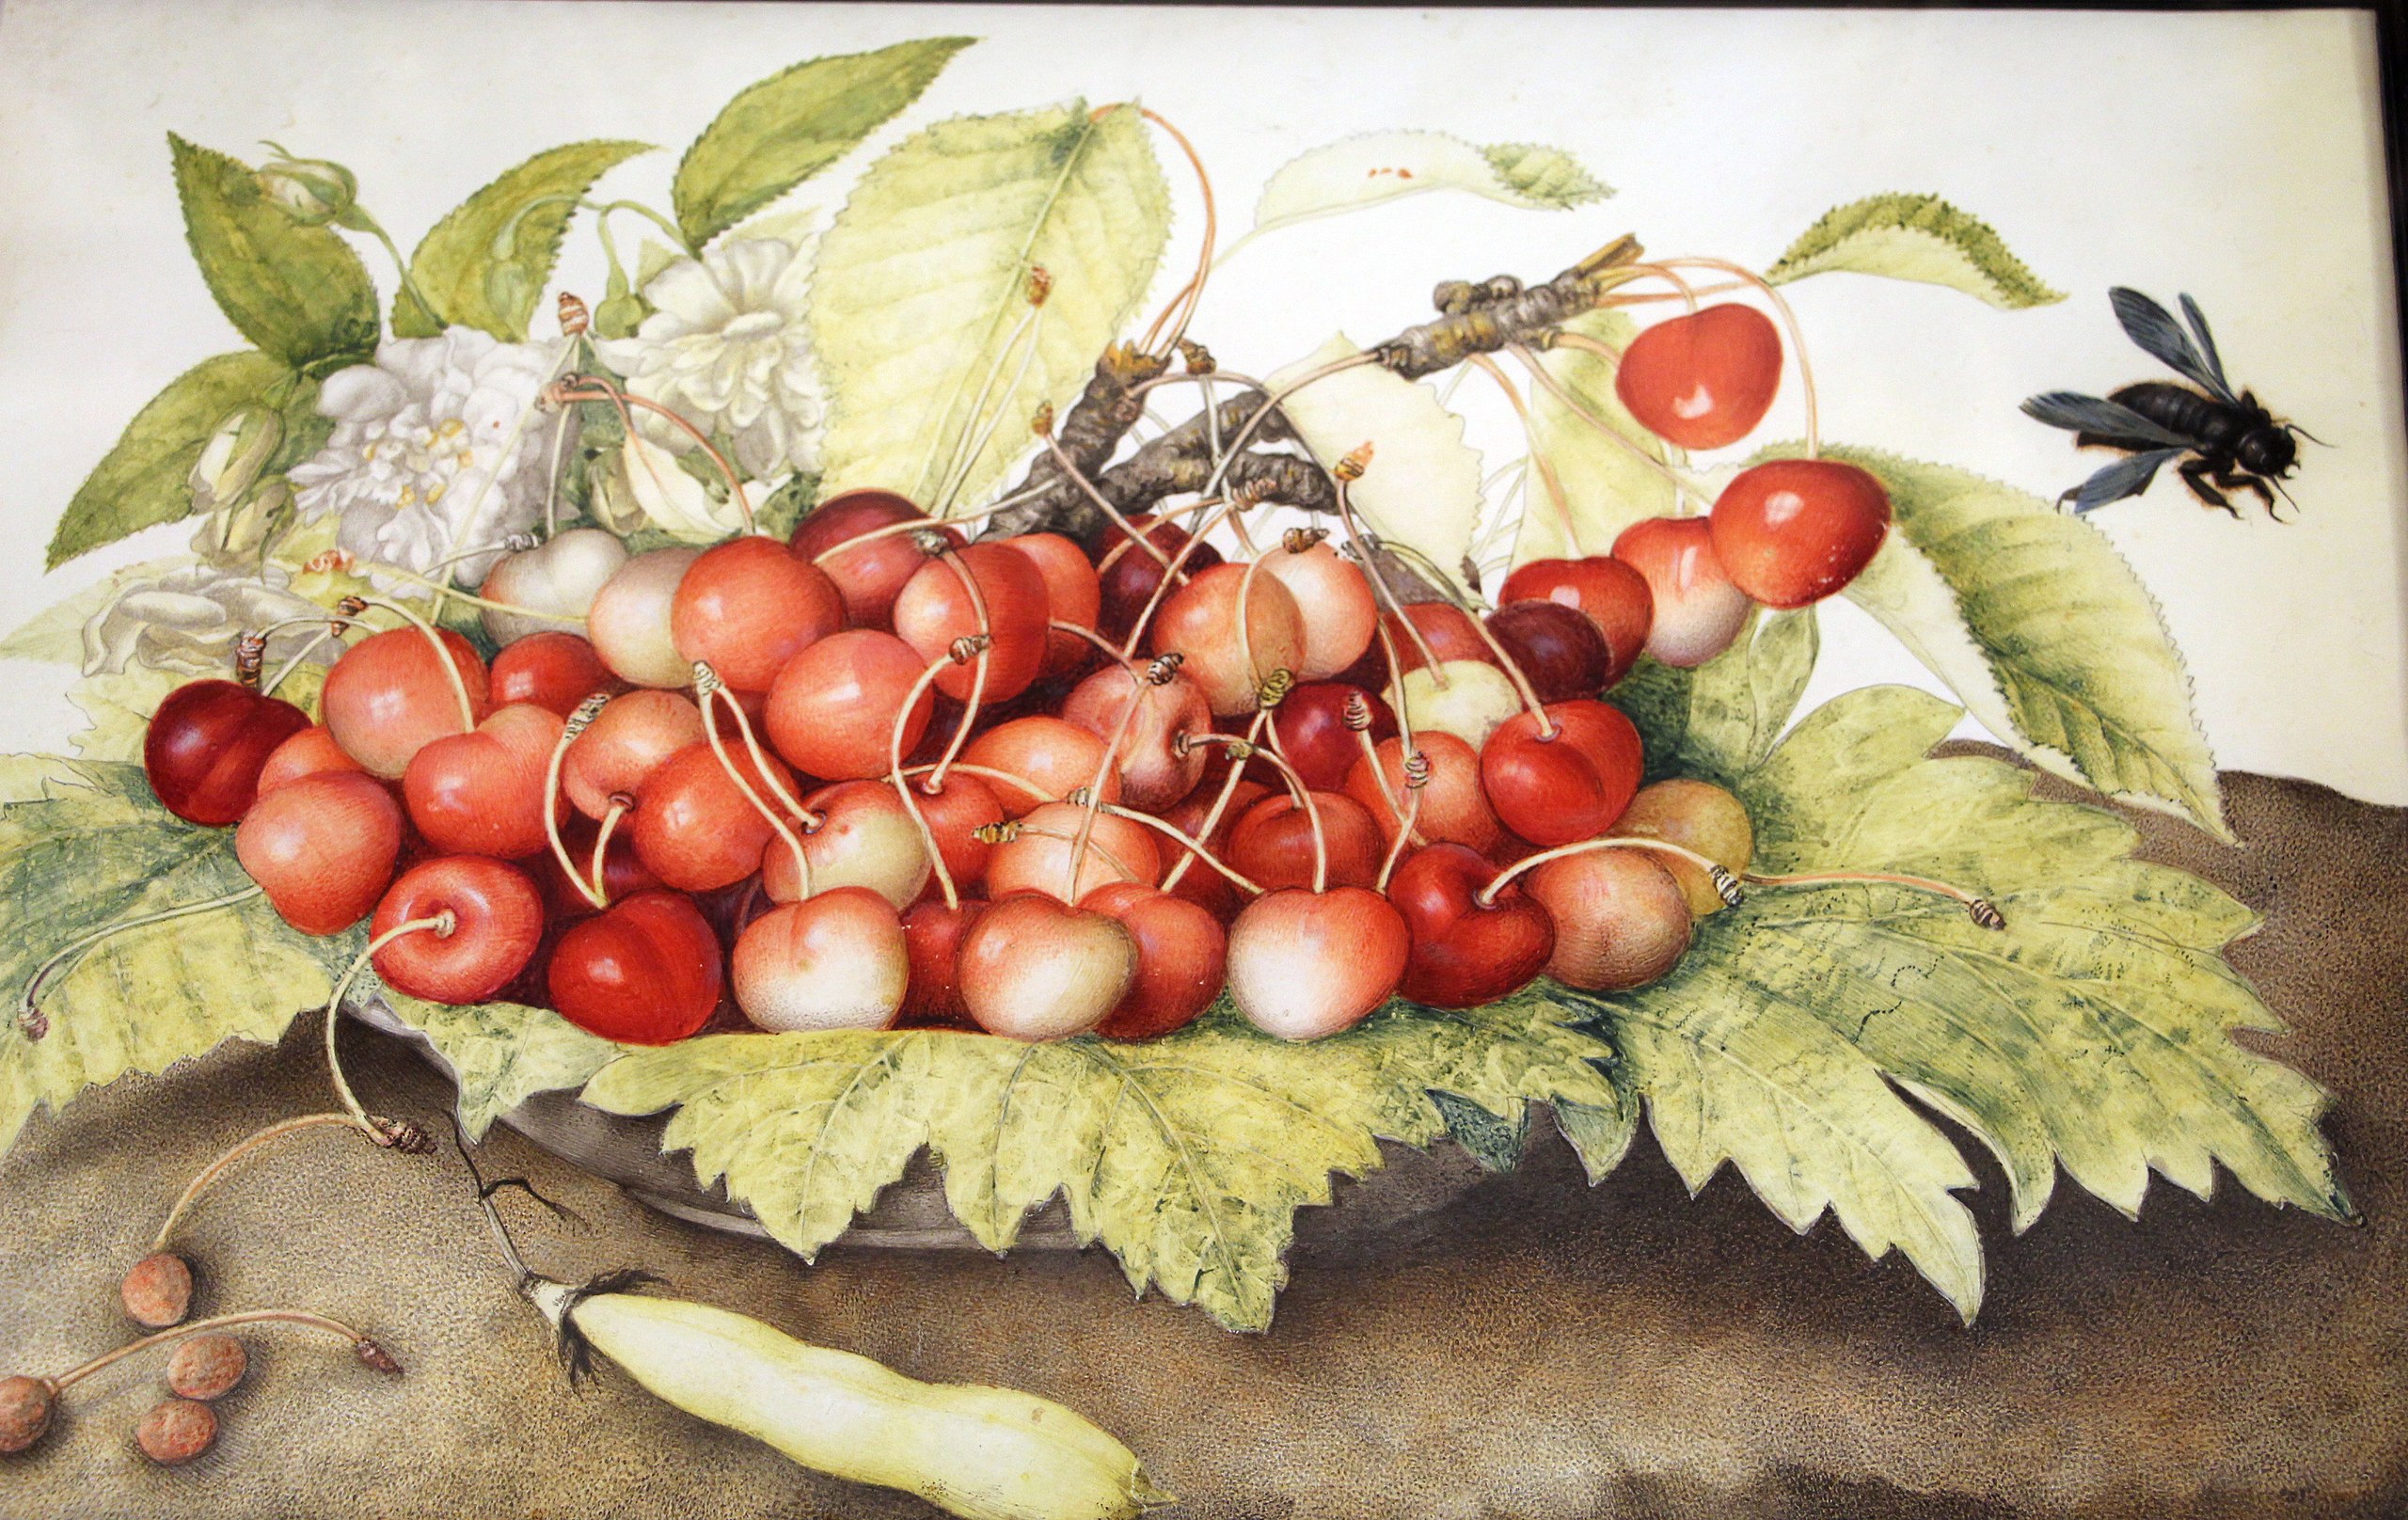 Черешня в блюде, стручок и шмель (Cherries in a Dish, a Pod, and a Bumblebee) by Giovanna Garzoni - ок. 1642-51 - 24.5 x 37.5 см 